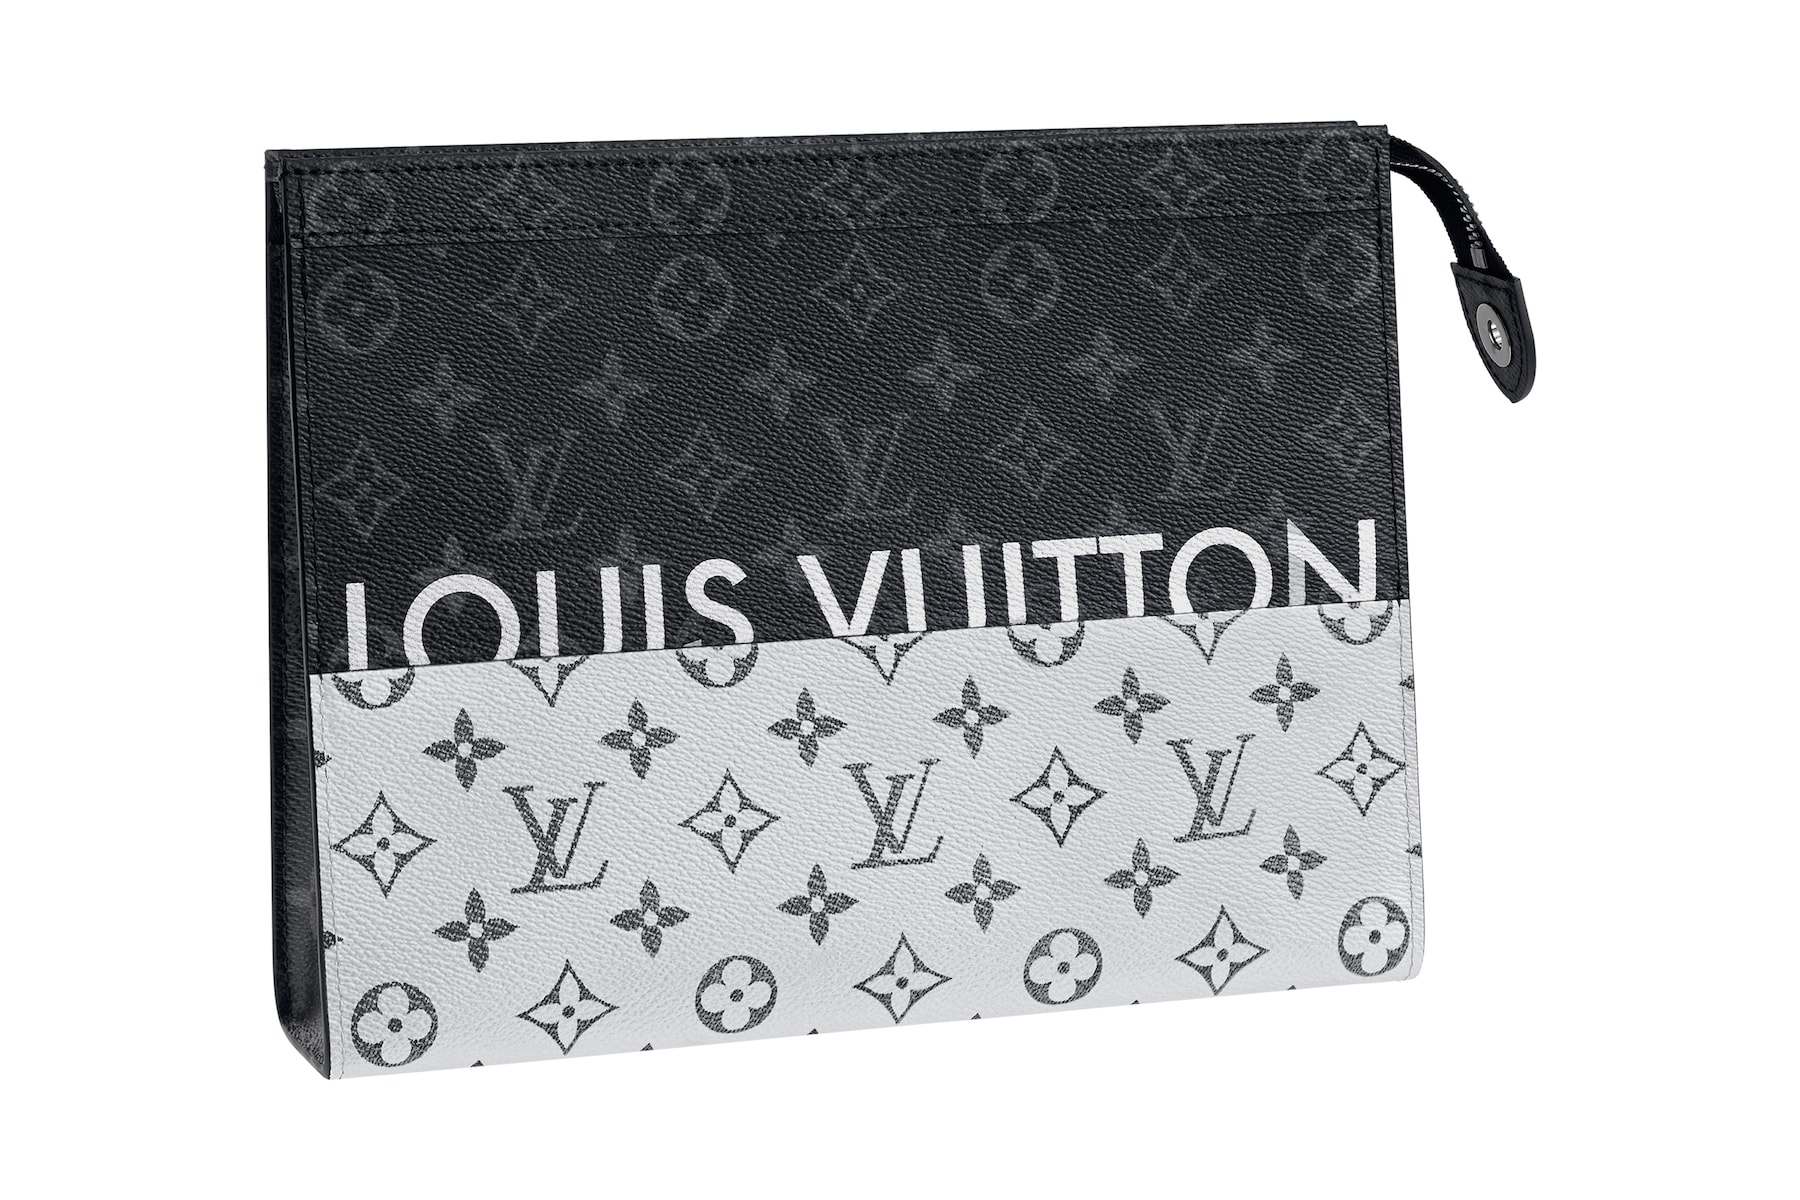 Louis Vuitton 全新 2018 春夏皮革系列新品一覽